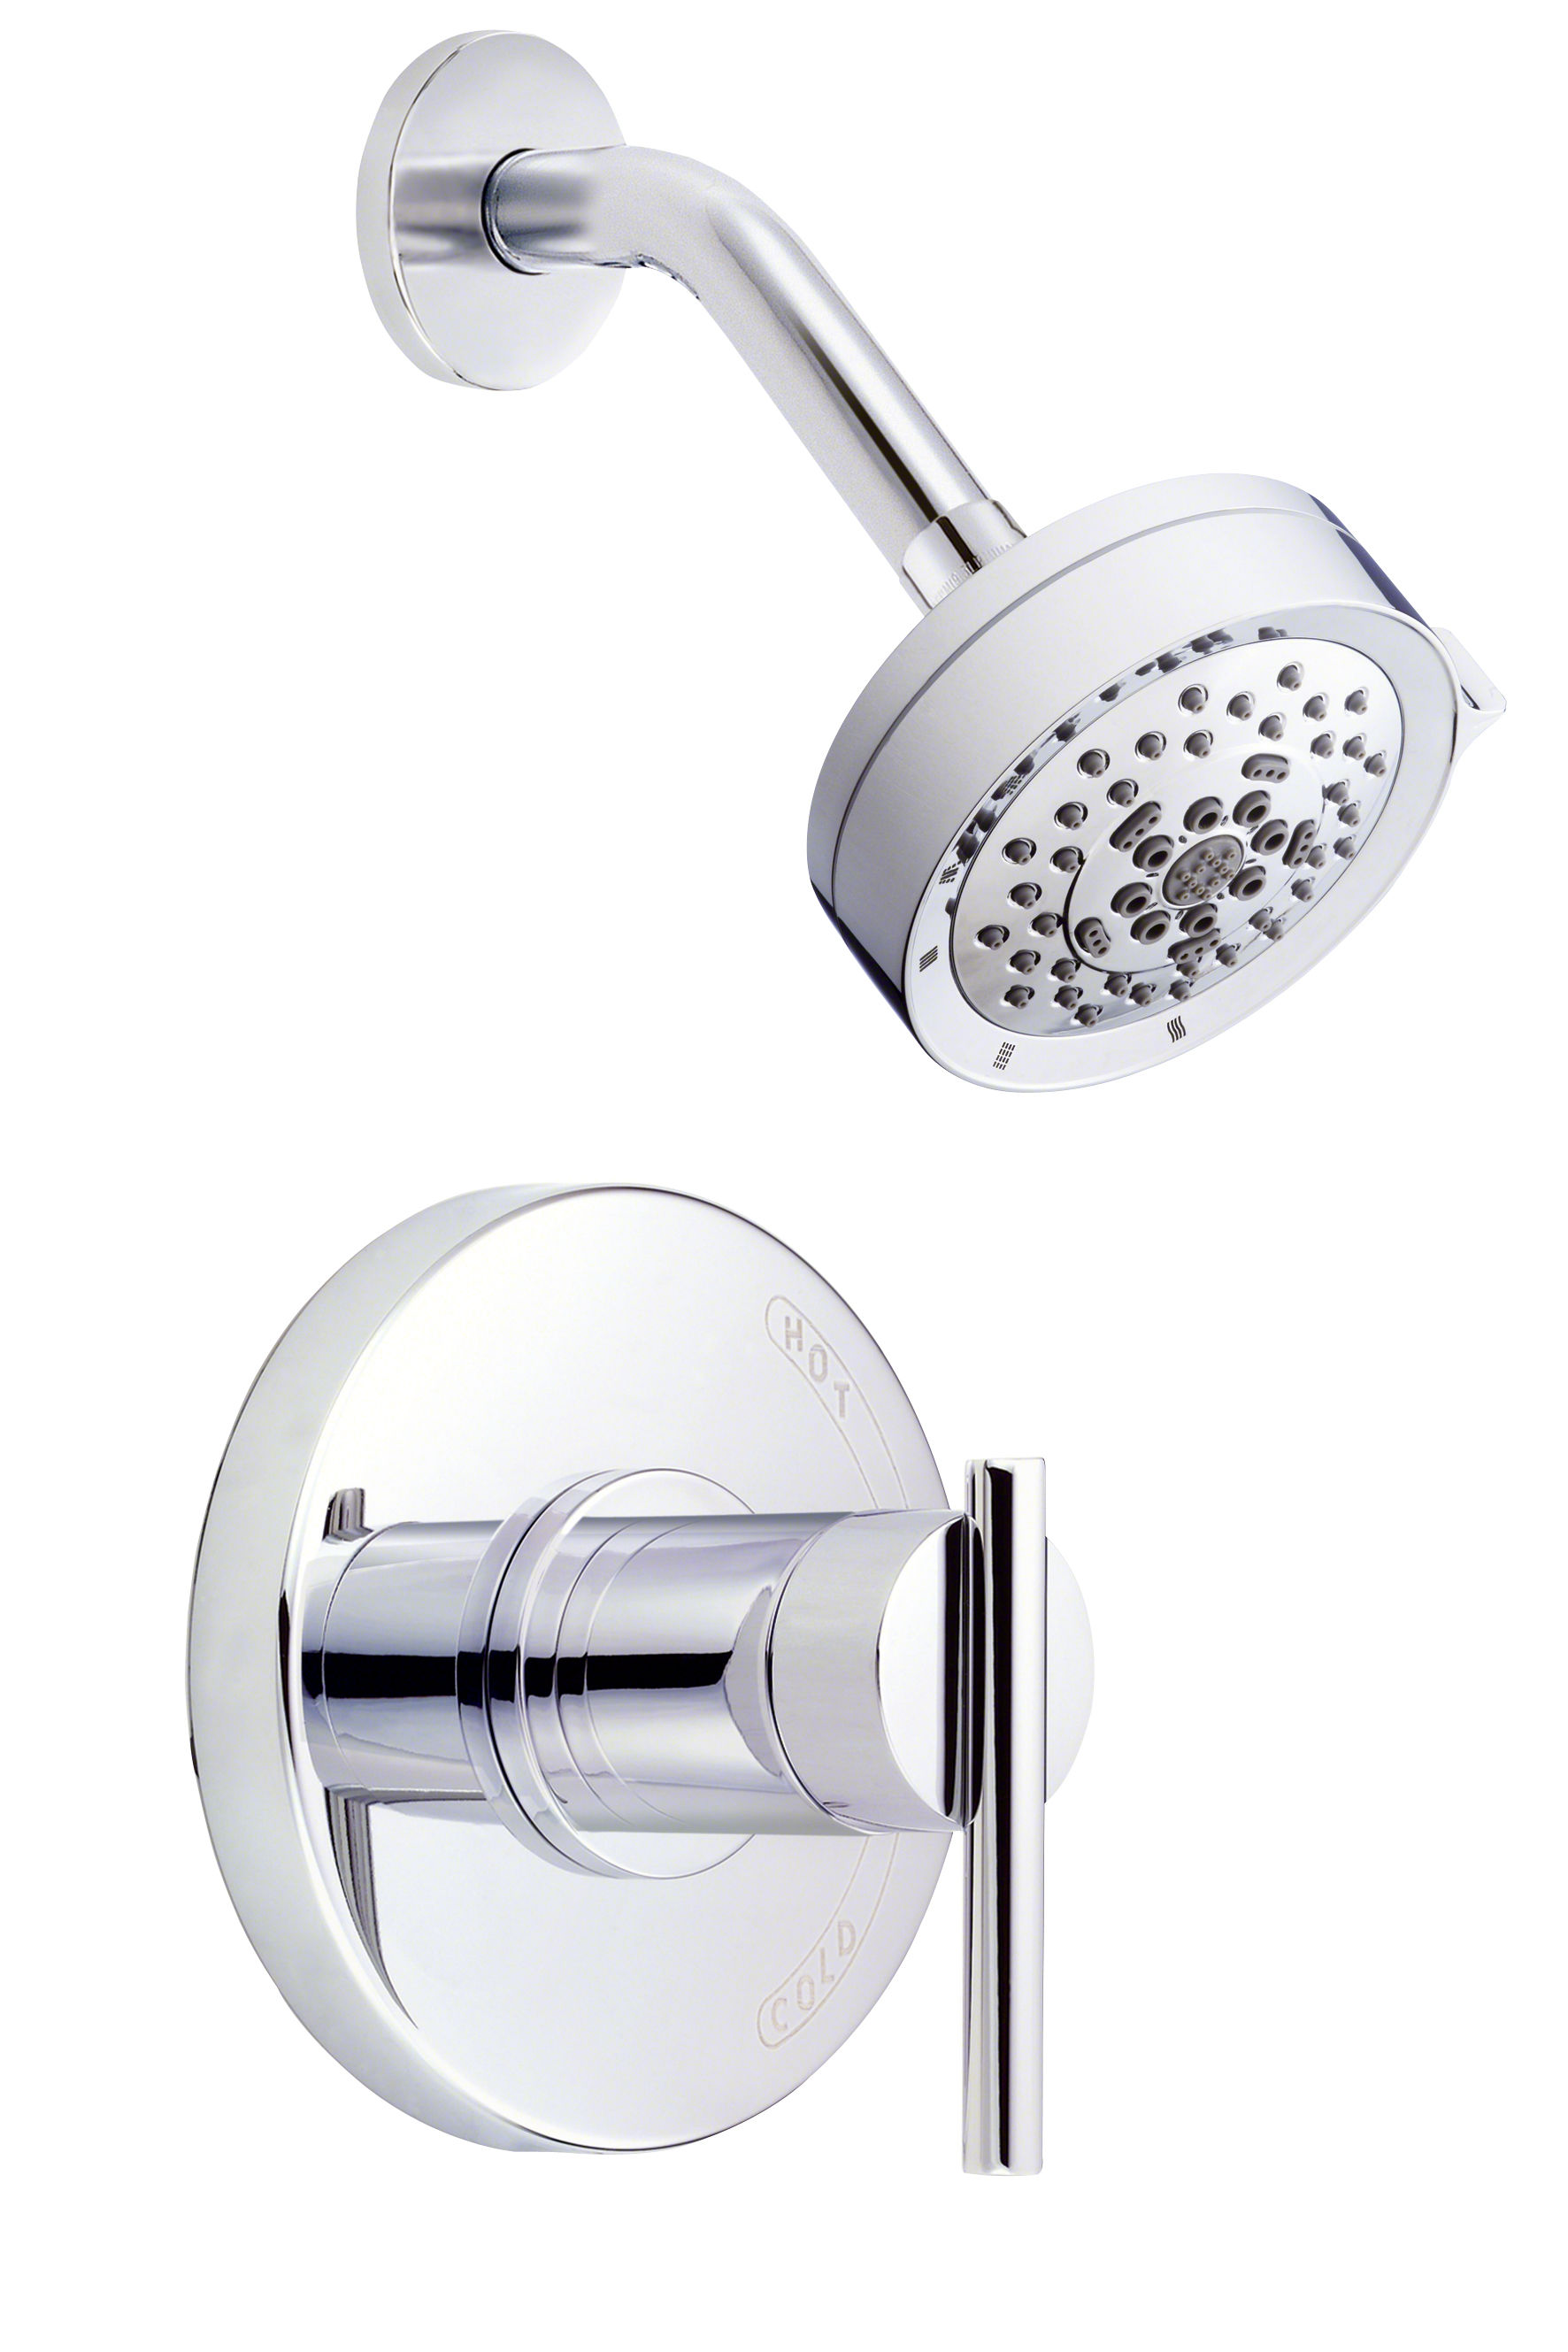 Danze D510558bnt Brushed Nickel Parma Pressure Balanced Shower